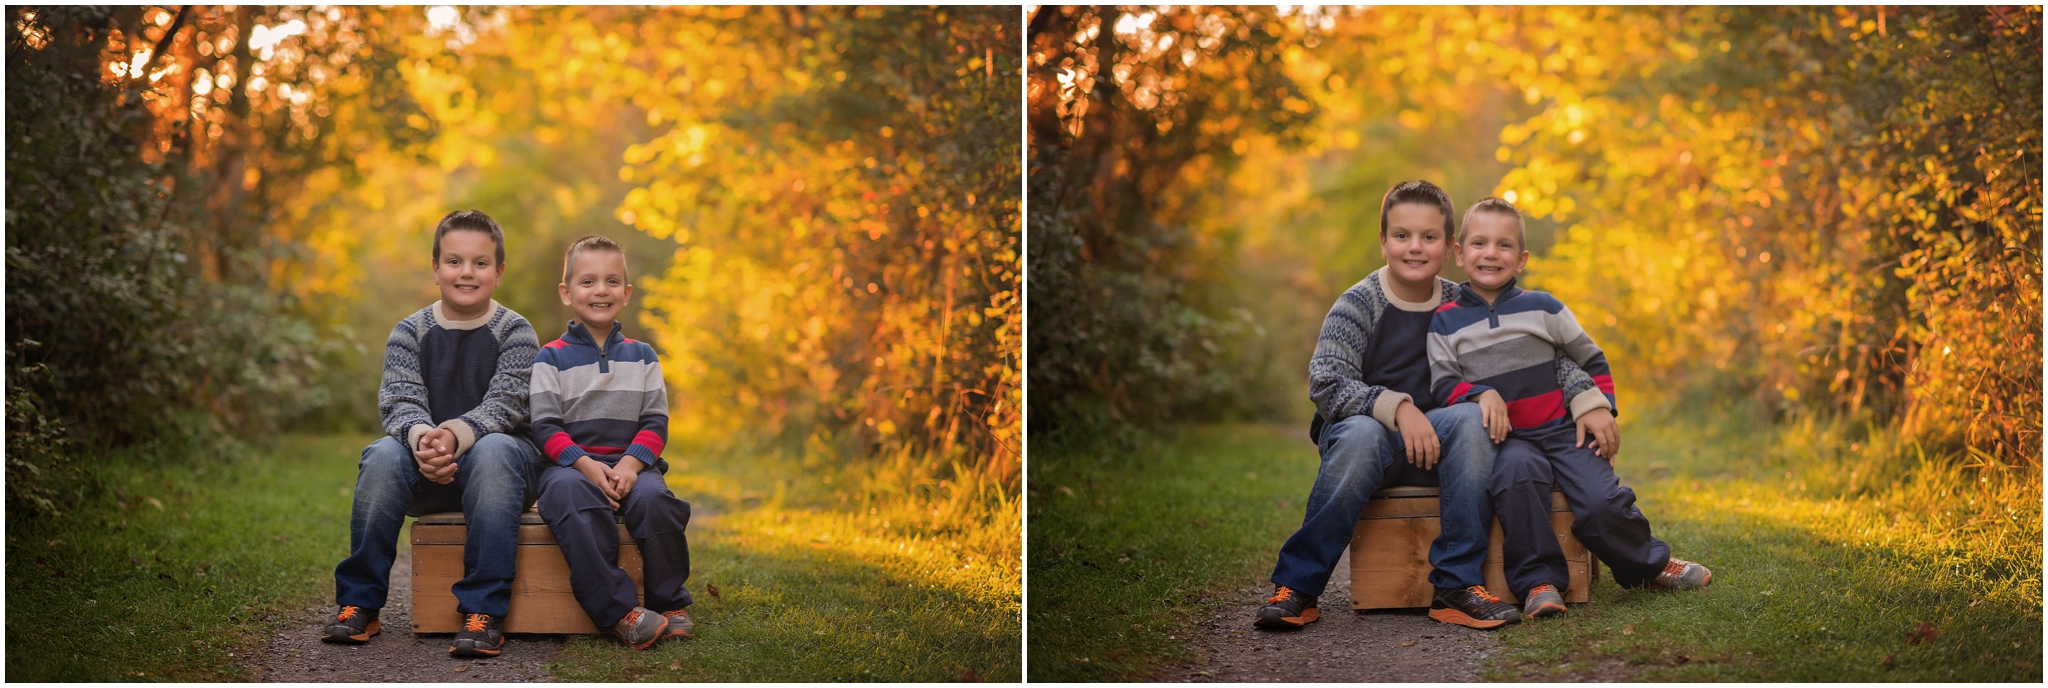 ottawa family photographer, child, children, fall photos